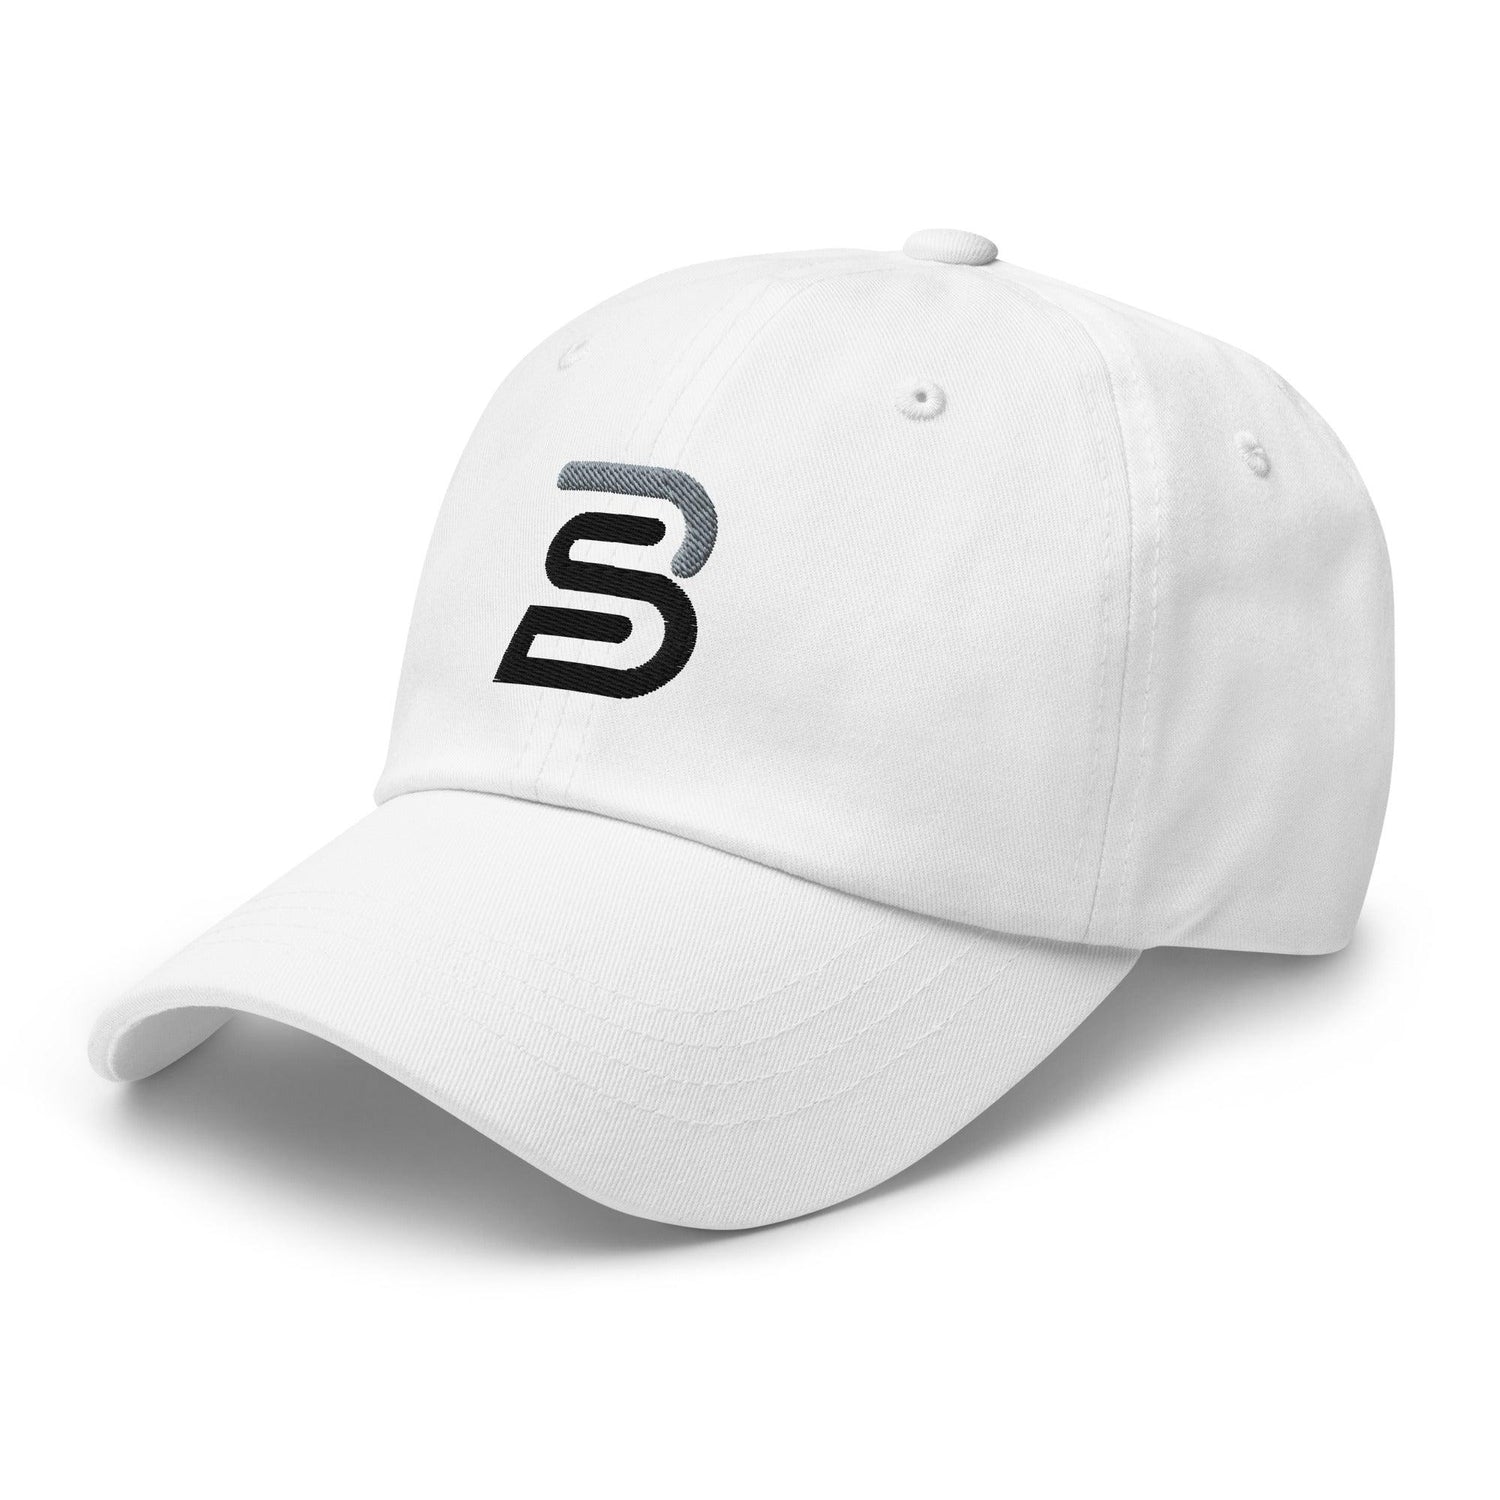 Bennett Sousa “BS” hat - Fan Arch